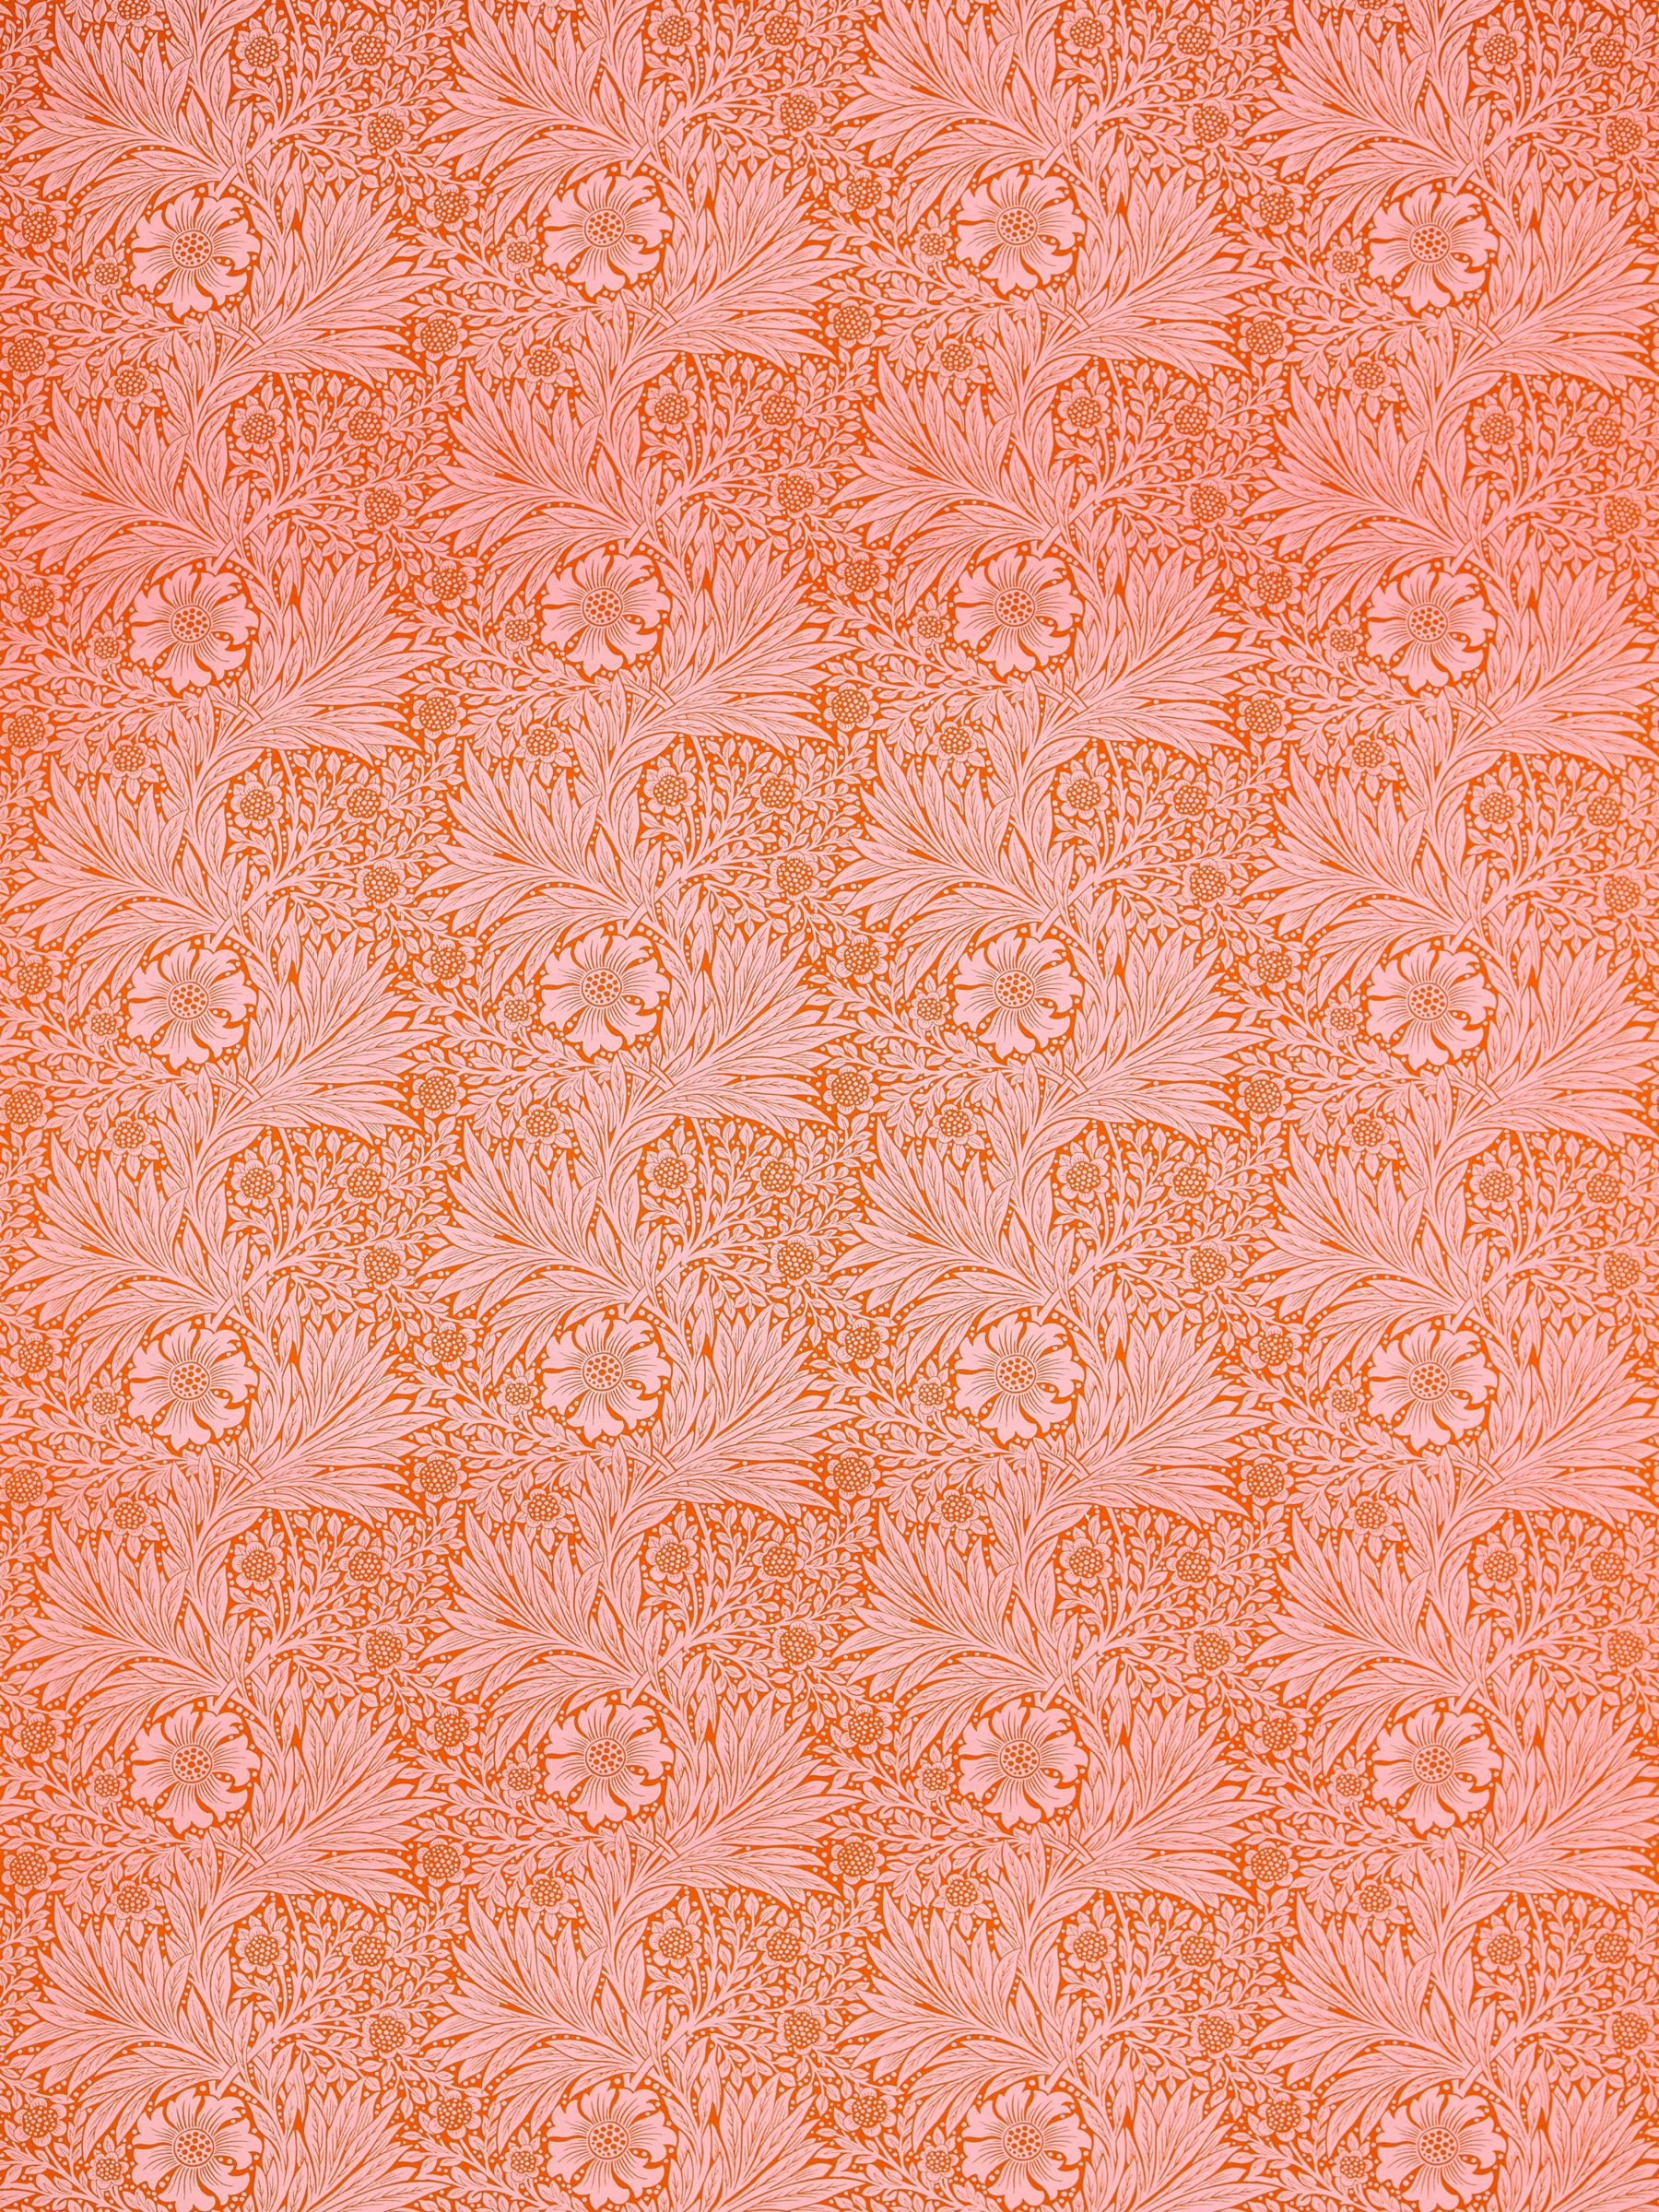 Morris & Co. Ben Pentreath Marigold Furnishing Fabric, Orange/Pink